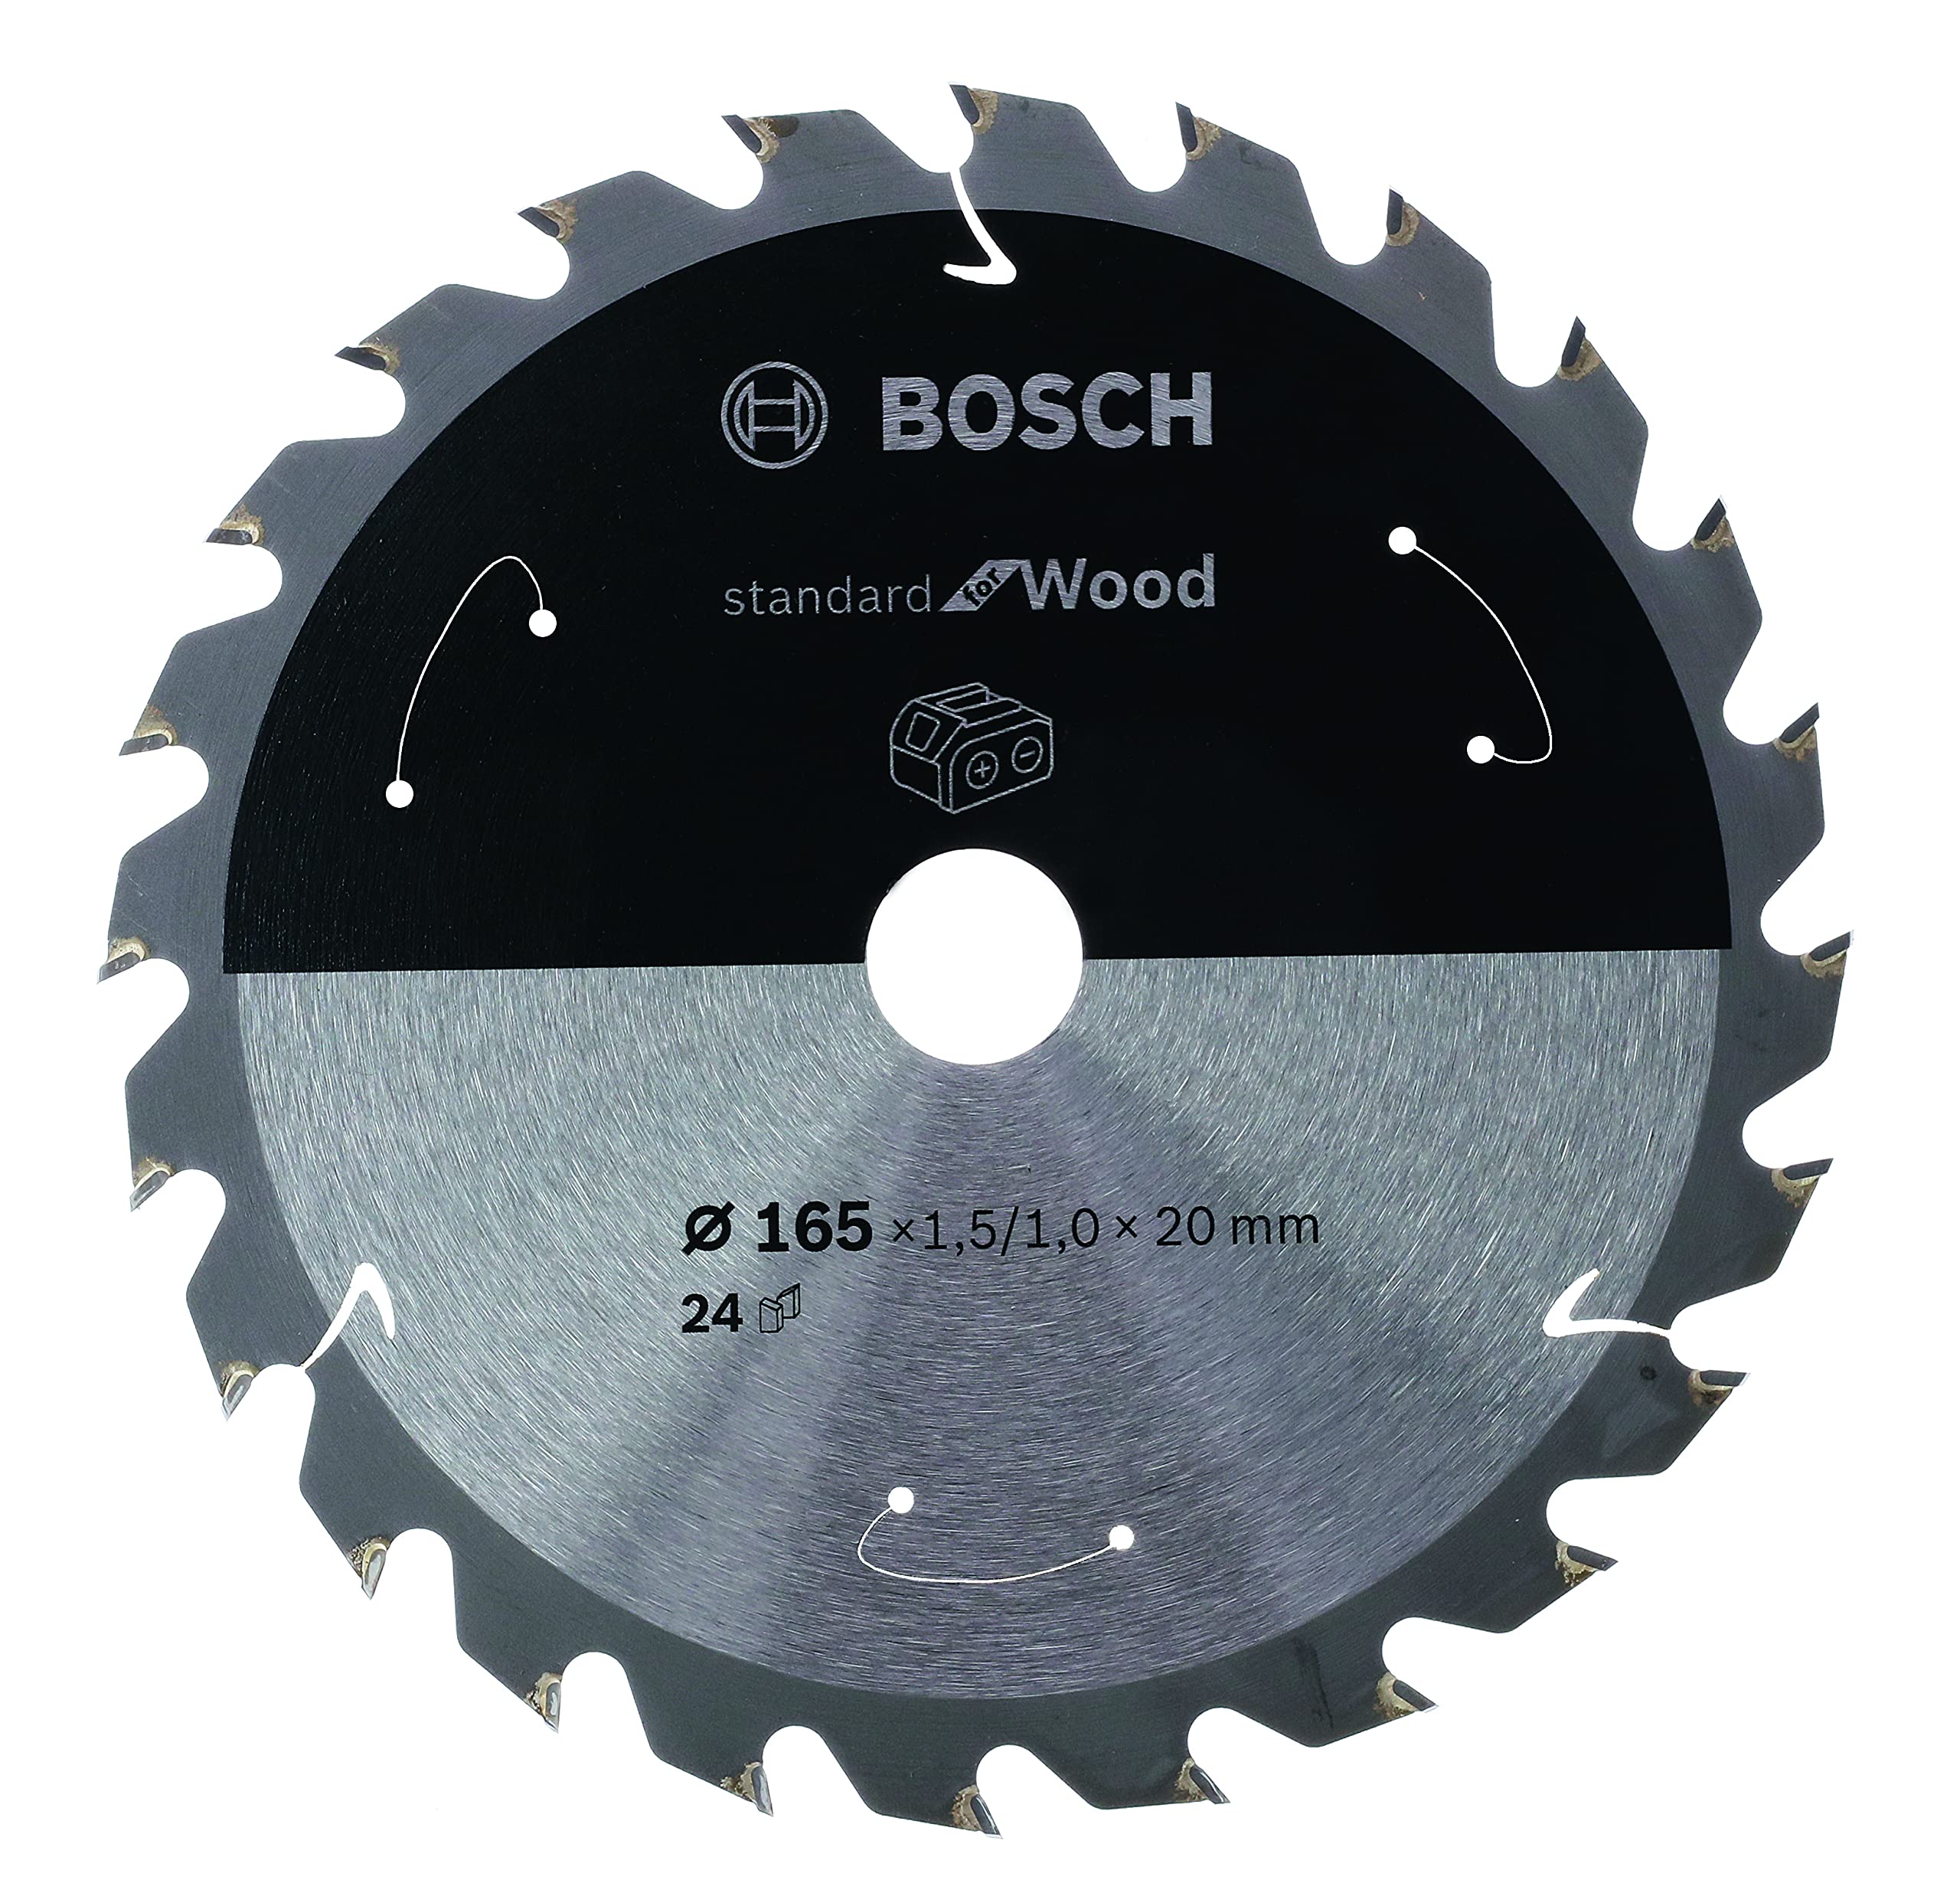 Bosch Professional 1x Kreissägeblatt Standard for Wood (Holz, Sägeblatt Ø 160 x 20 x 1,5 mm, 24 Zähne, Zubehör Akku Kreissäge)